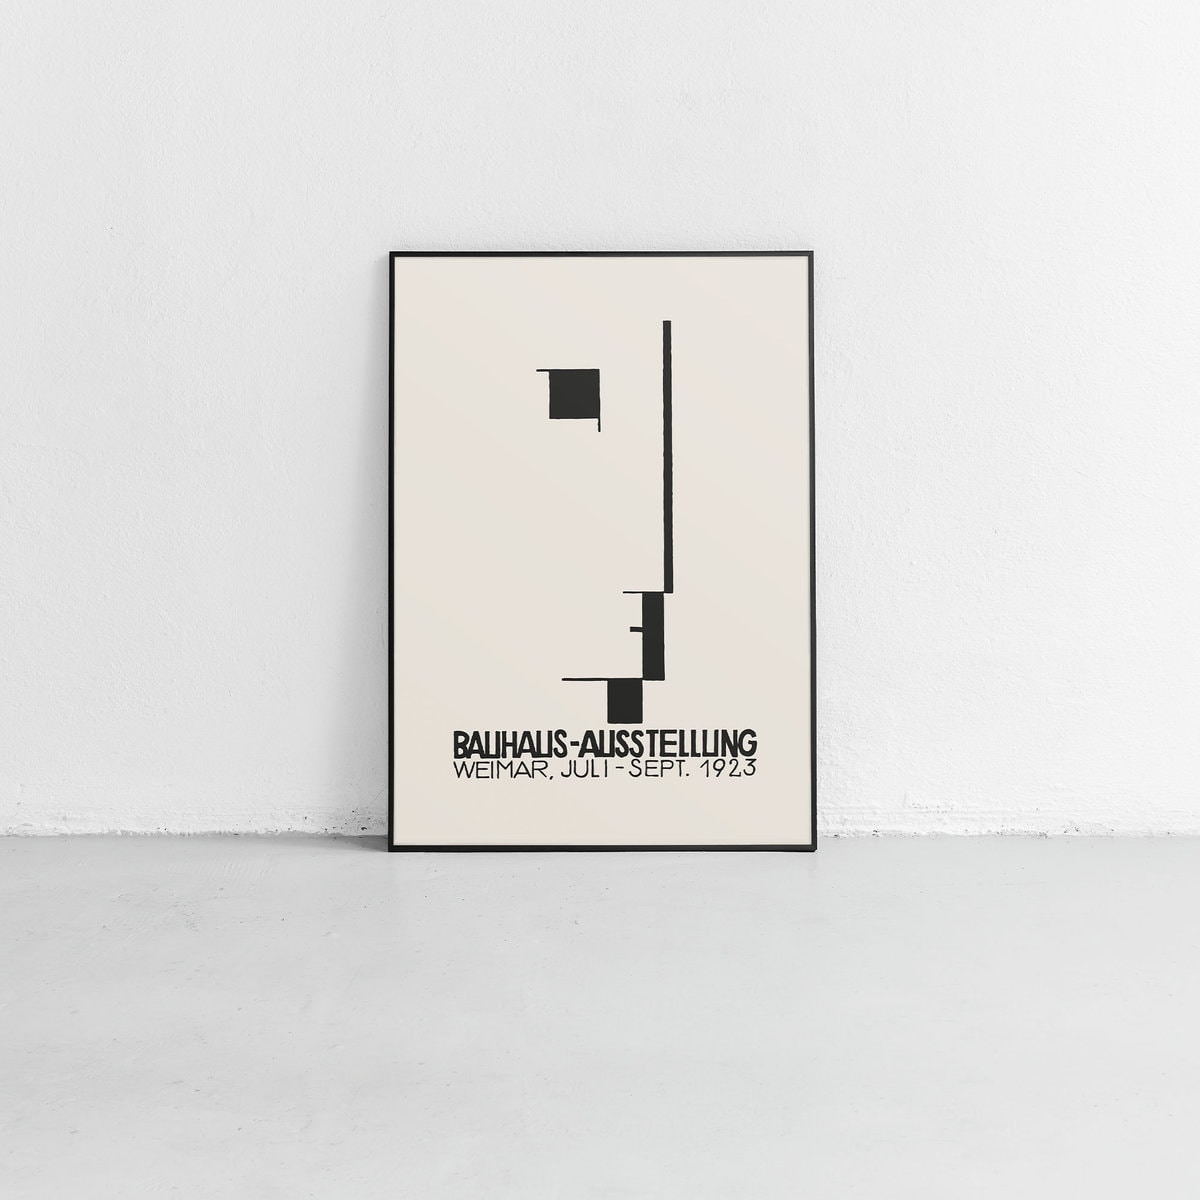 Bauhaus – Ausstellung Art Exhibition 1923